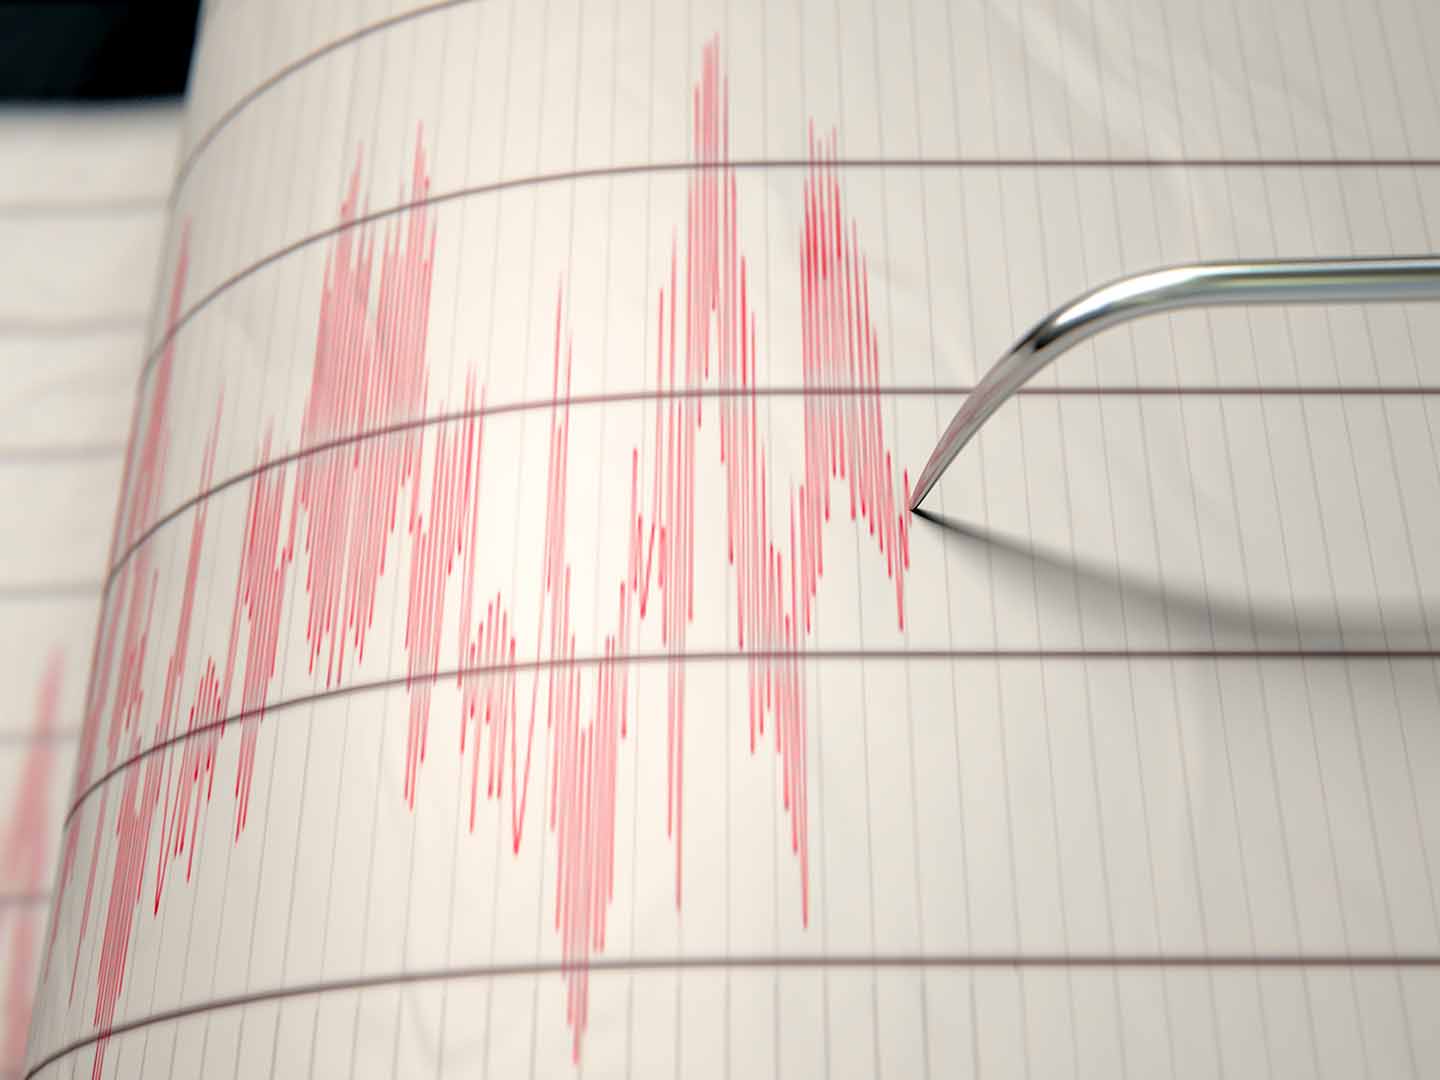 The Great Earthquake